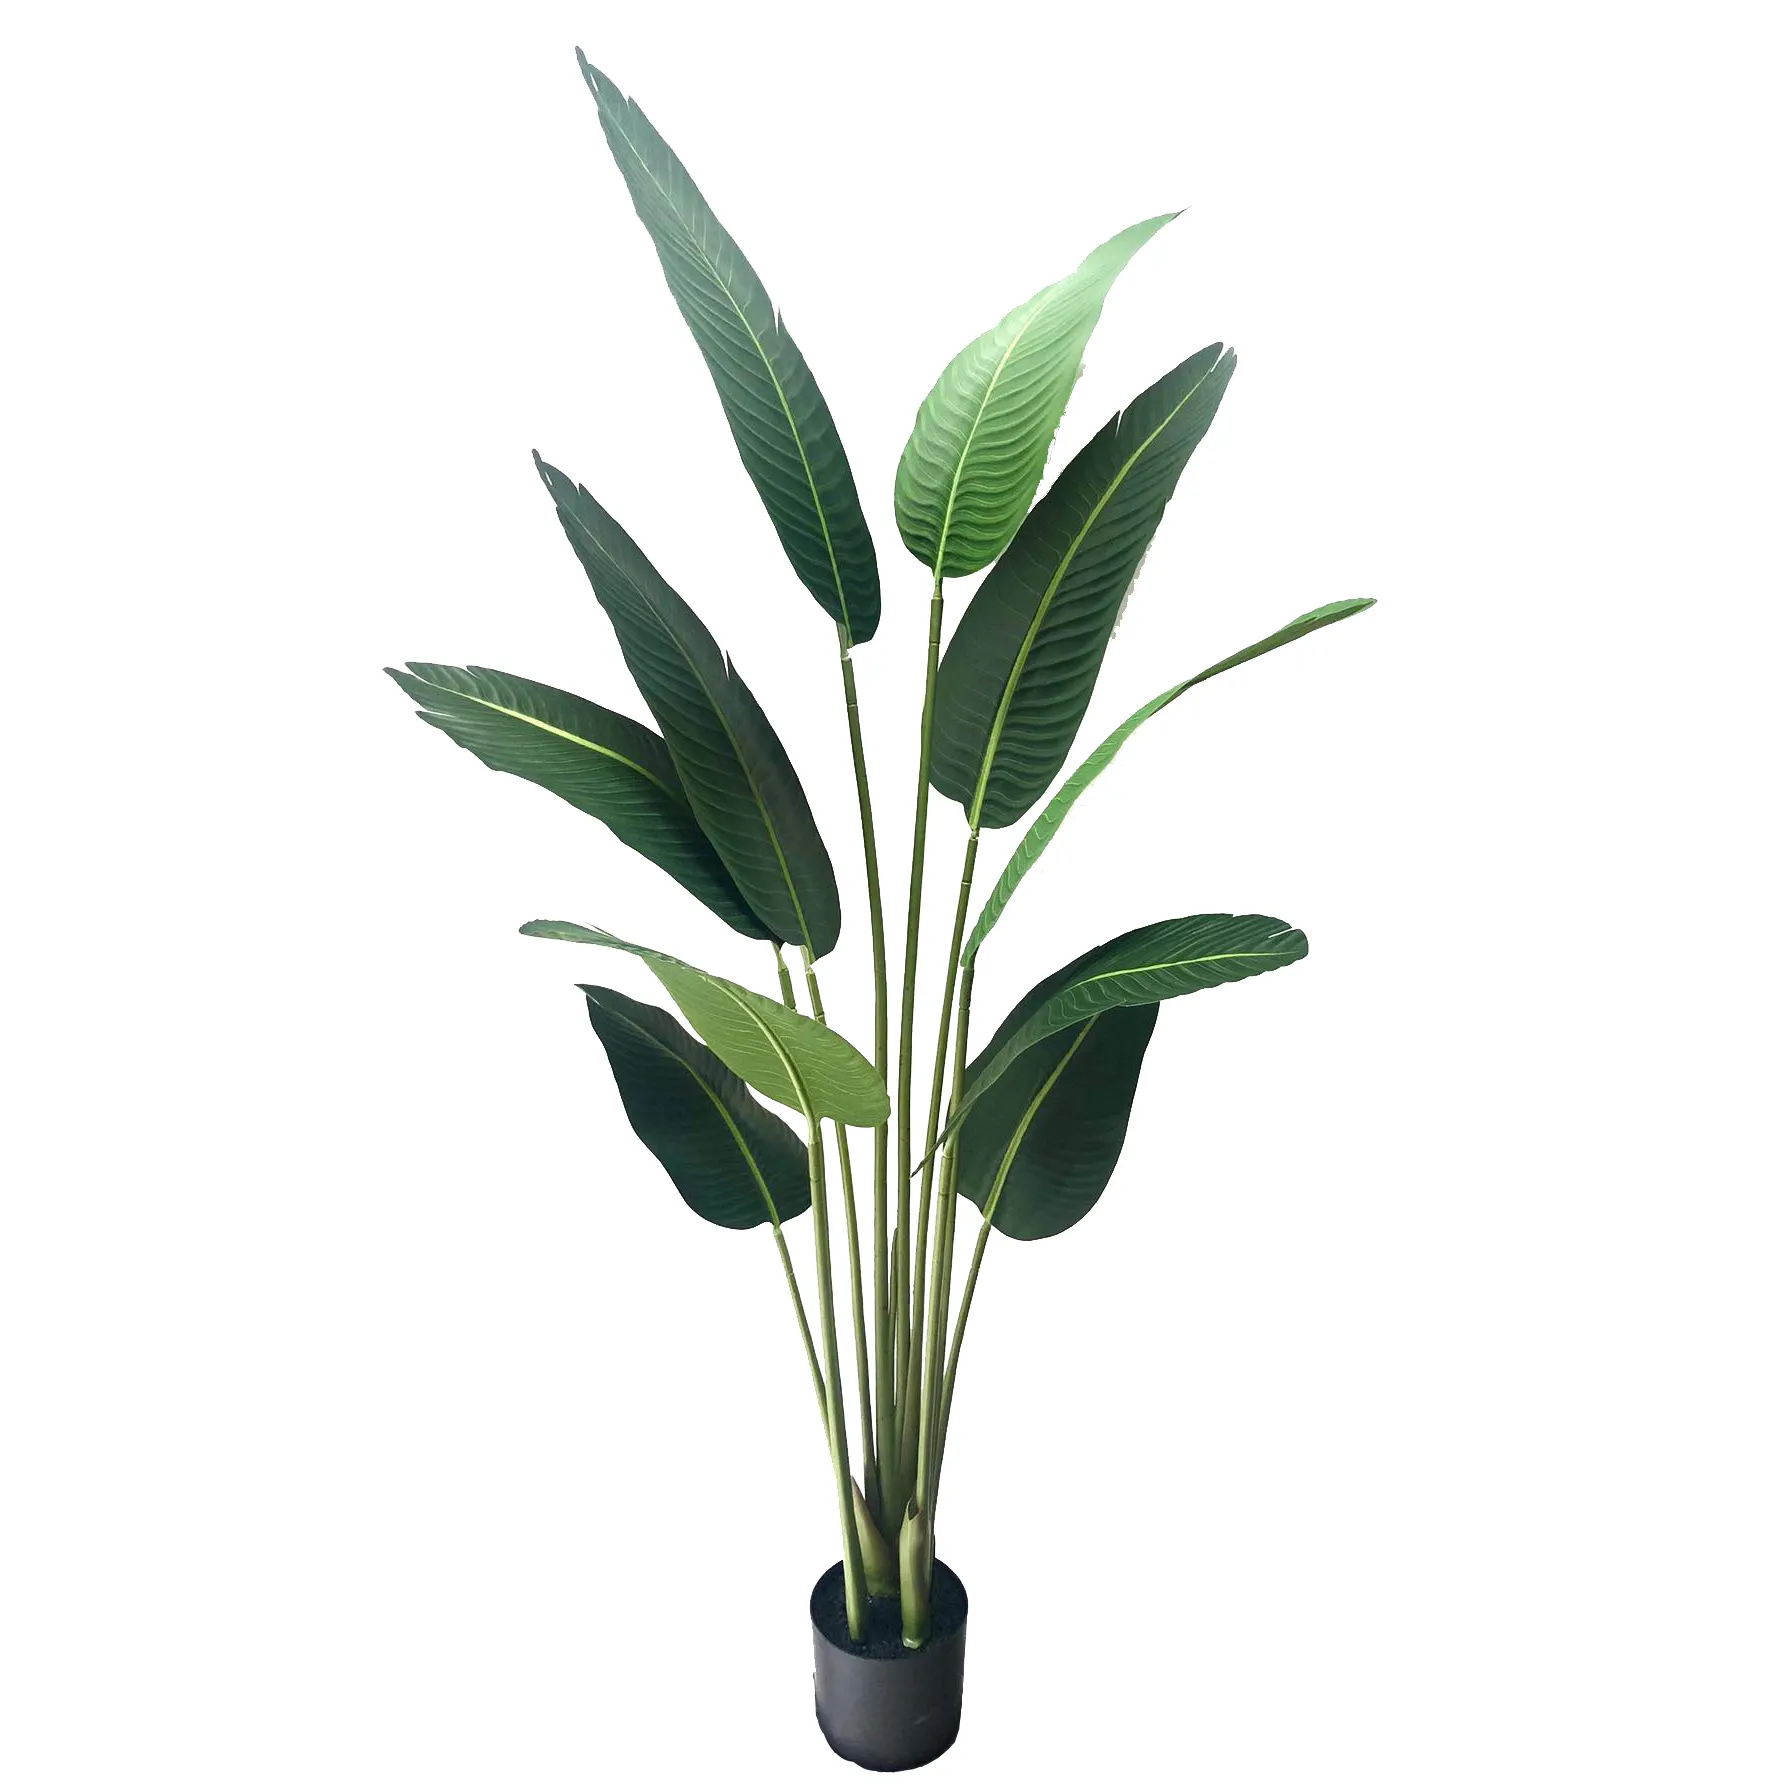 Casa artificial plantas palmeira viajante, planta pássaro do céu bonsai skybird planta artificial